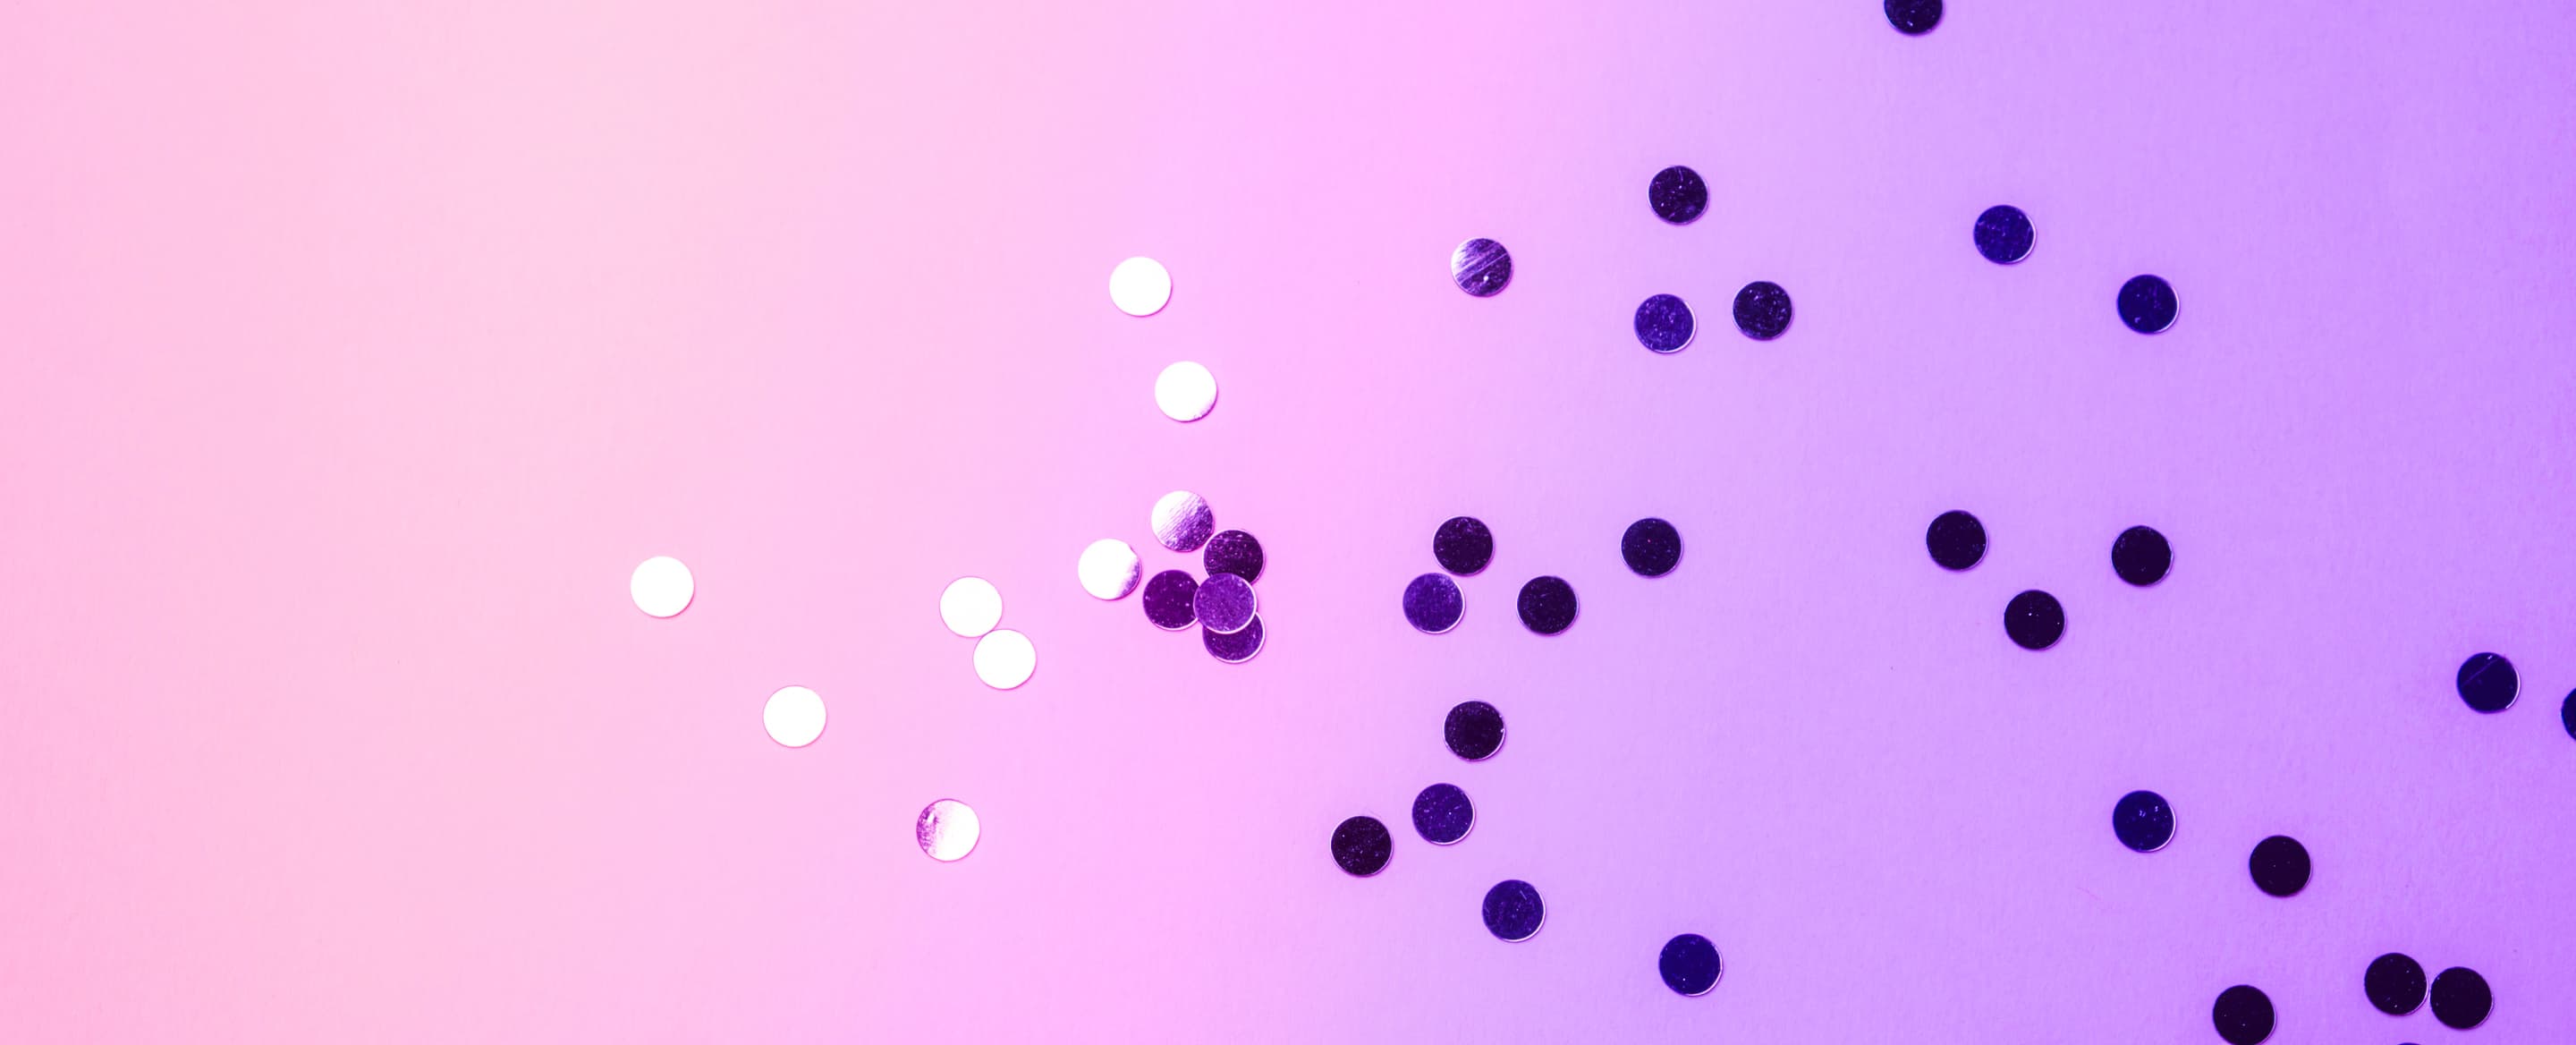 Sparkling confetti on pink purple background 55 S6 U8 C